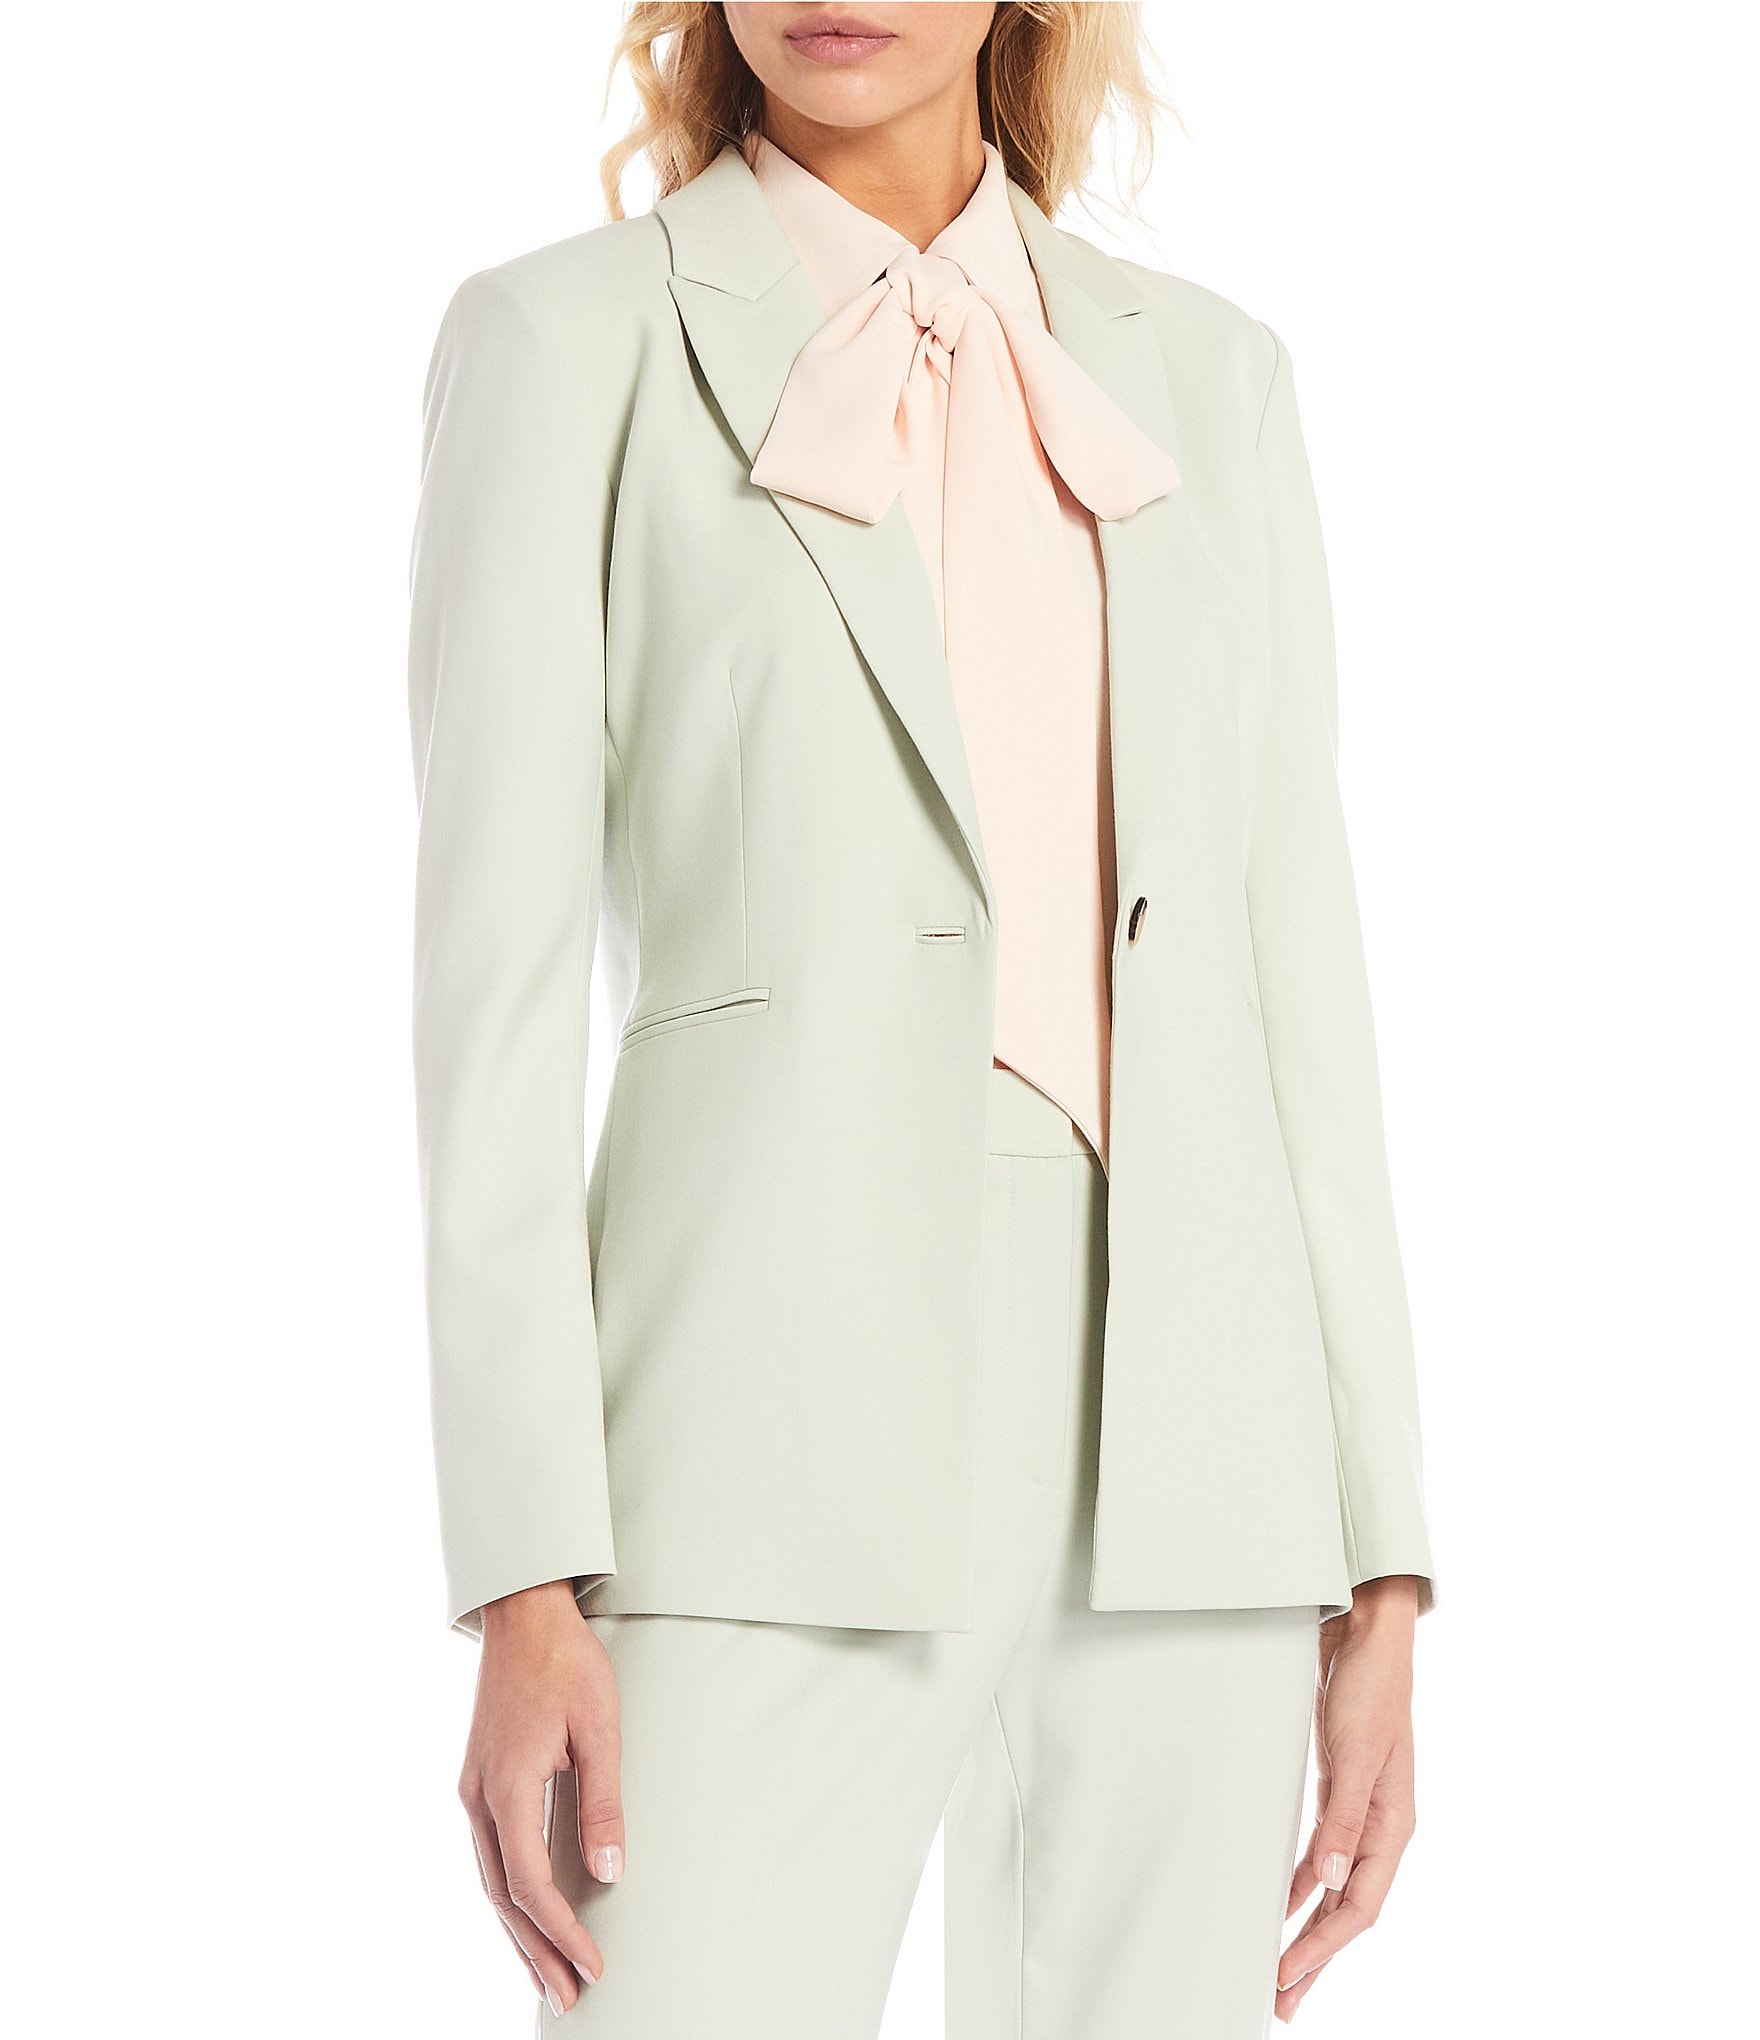 Green Women's Work Jackets & Blazers | Dillard's